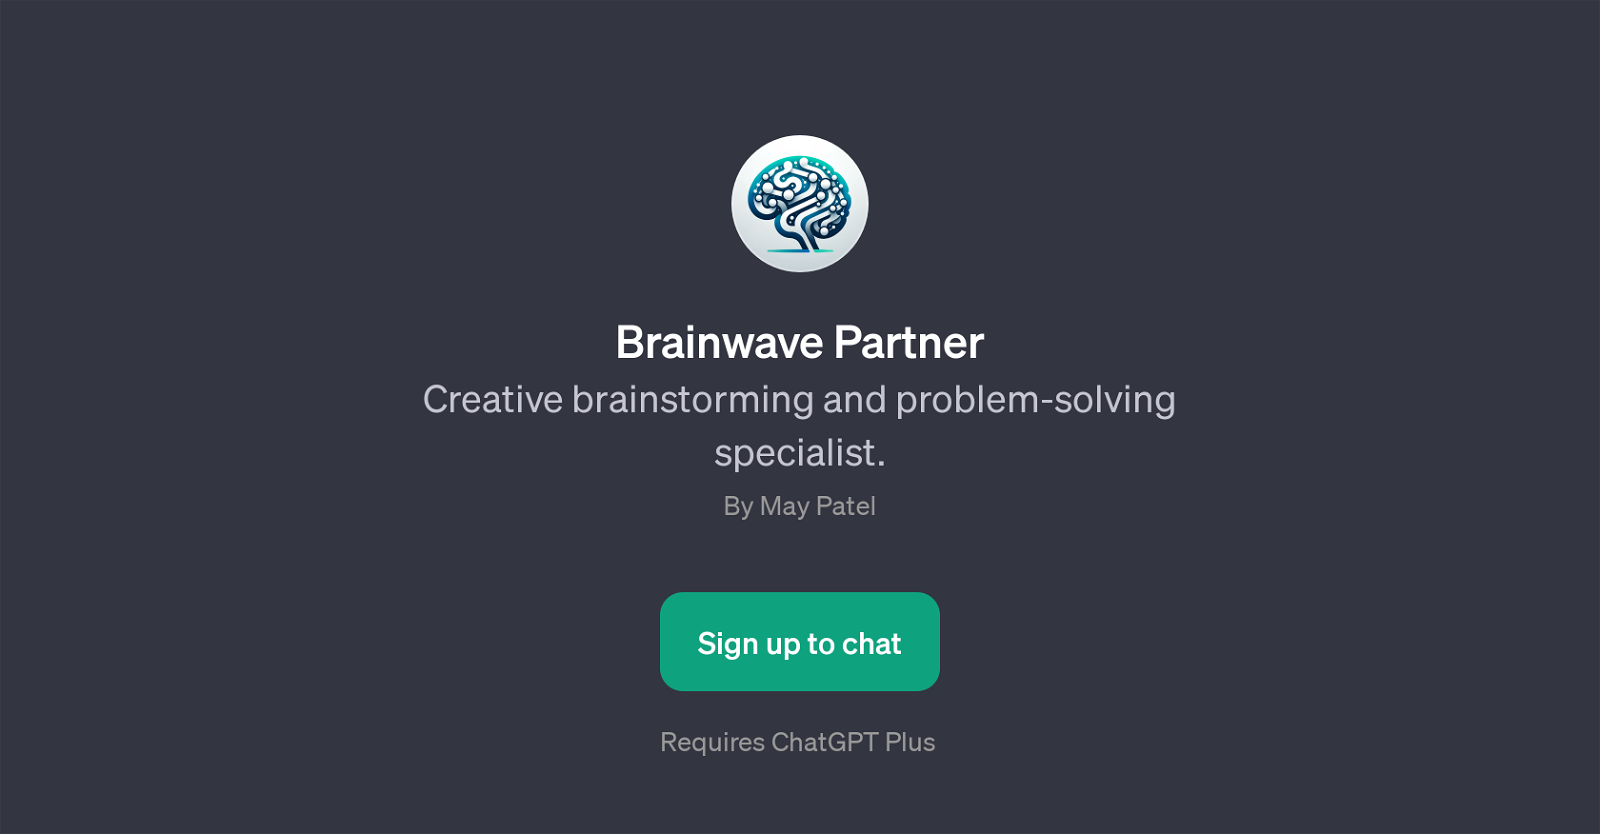 Brainwave Partner website